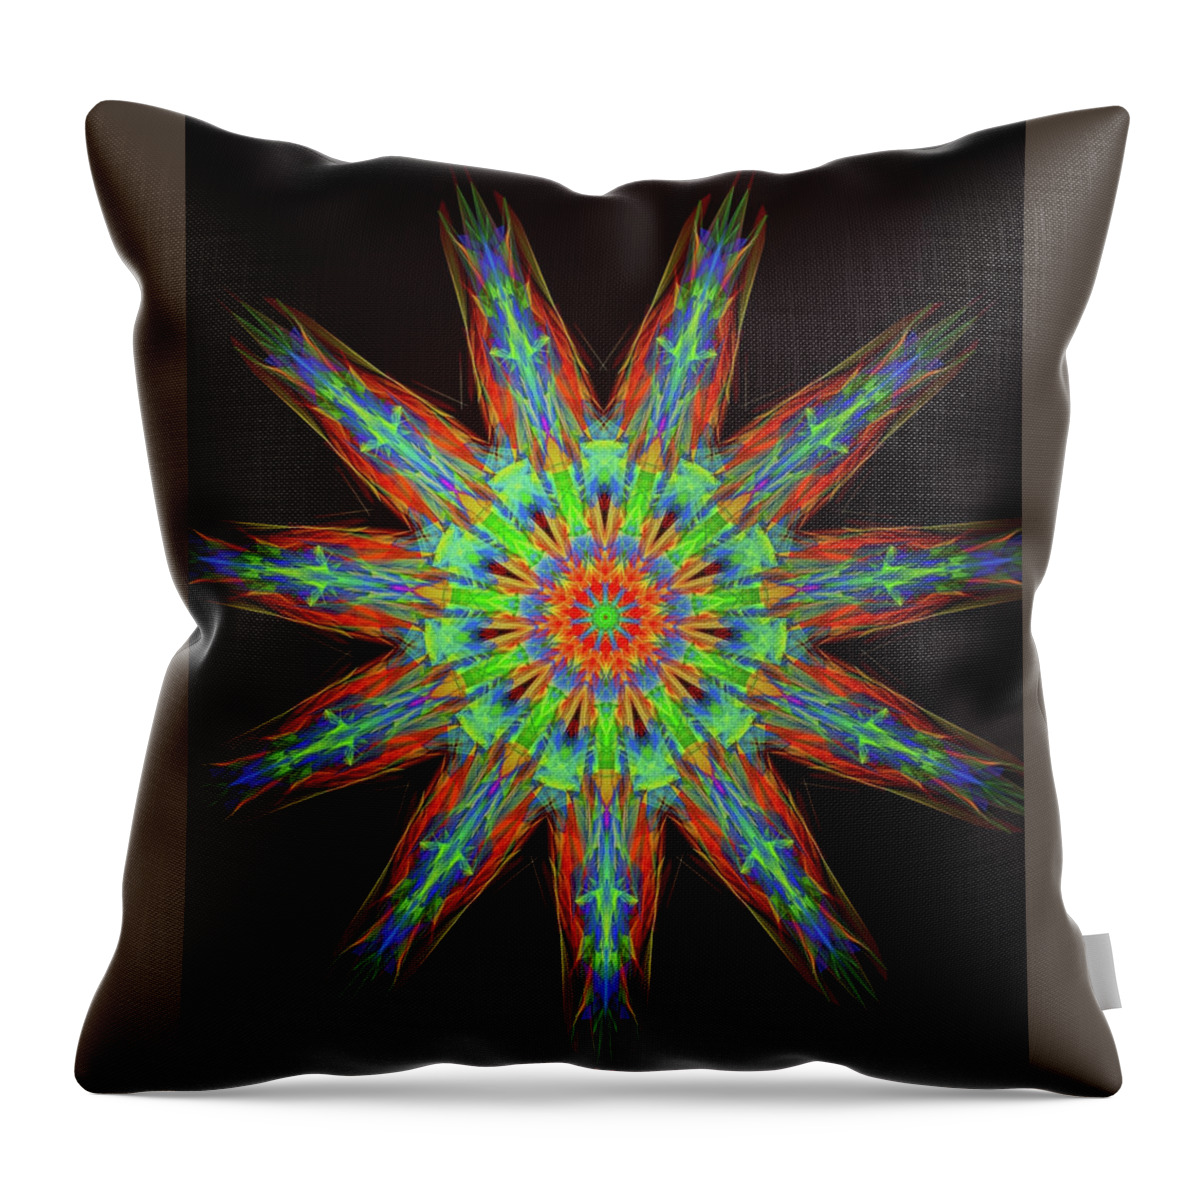 Multi Dimensional Mandala Throw Pillow featuring the digital art Multi Dimensional Mandala by Michael Canteen